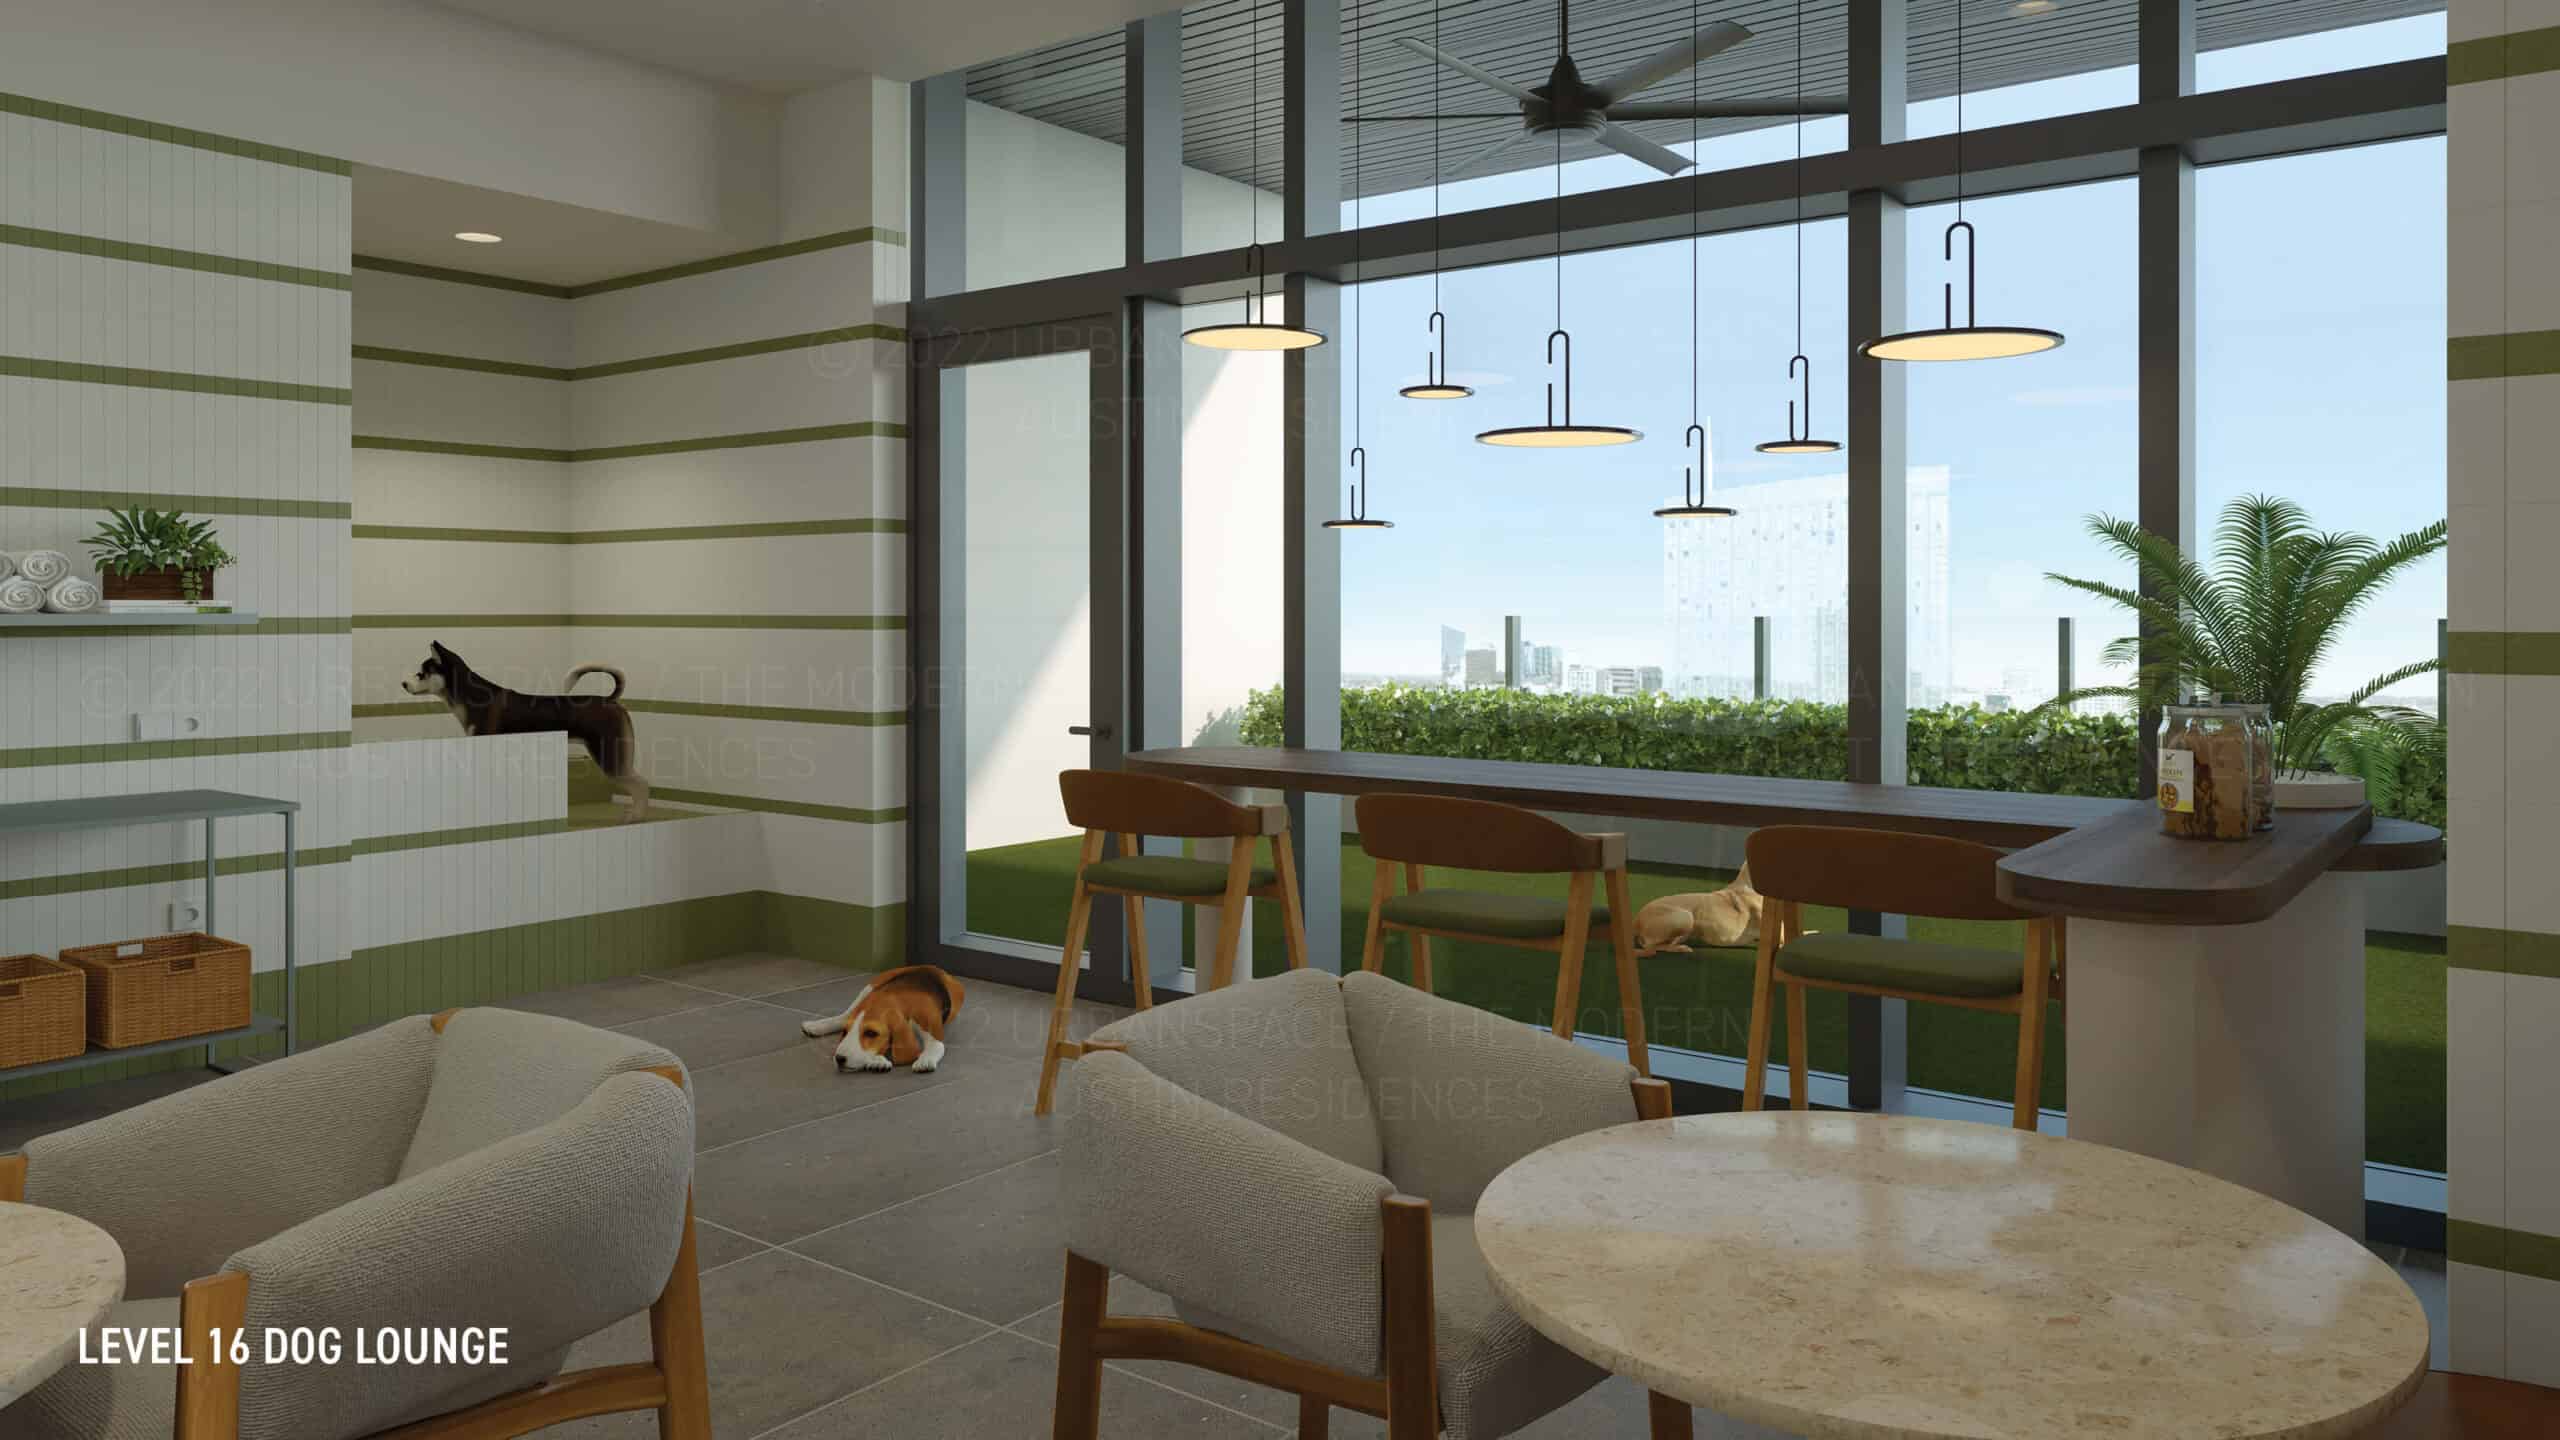 The Modern Austin Residences - Dog Lounge rendering B